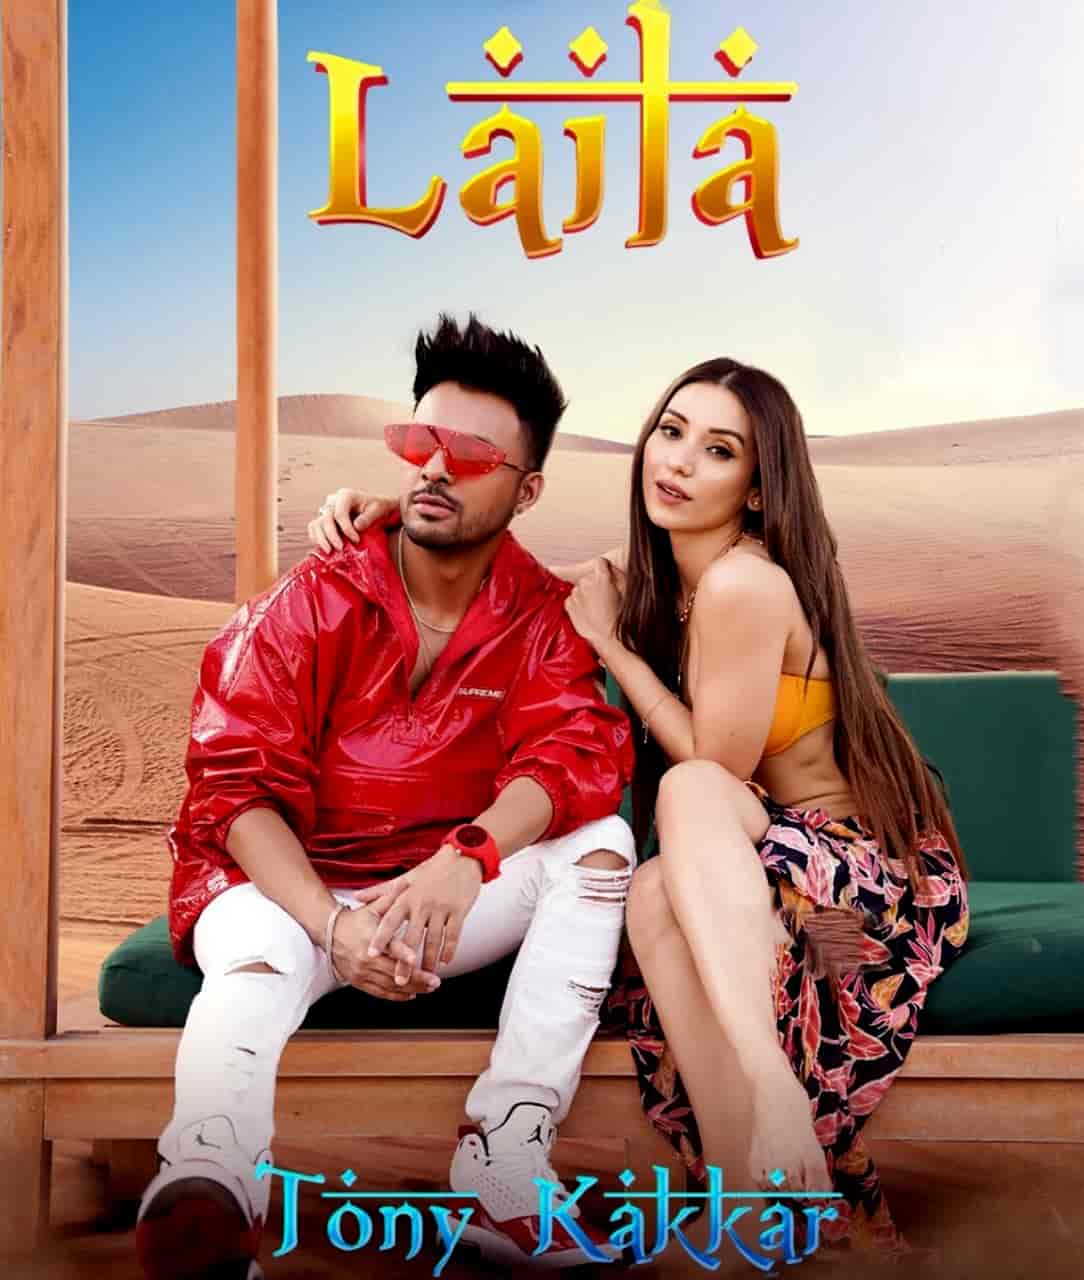 Laila Hindi Dance Song Image Features Tony Kakkar